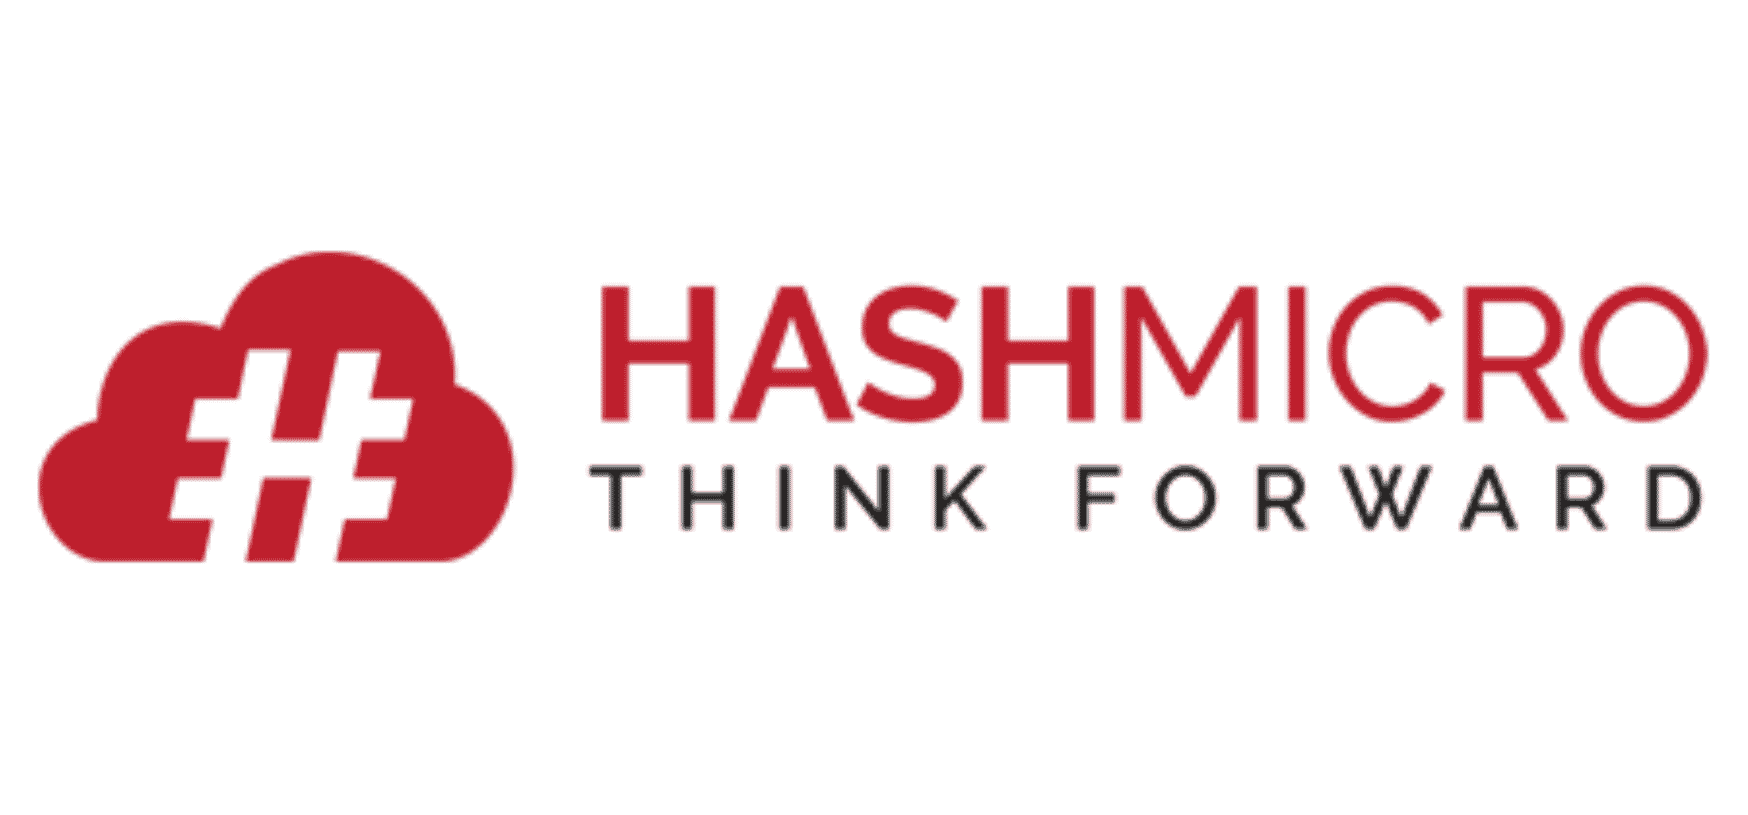 HashMicro F&B Software